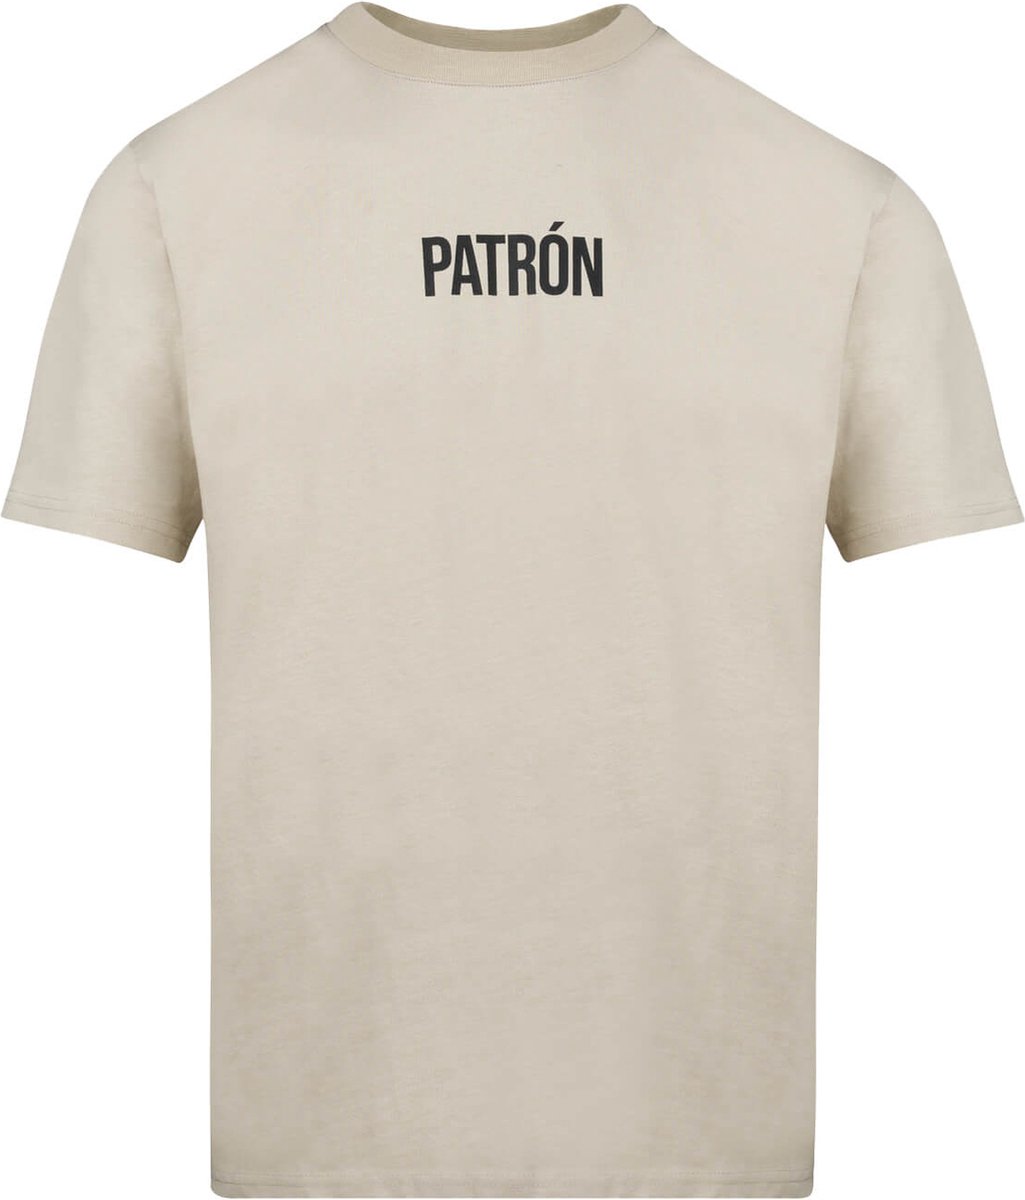 Patrón Wear - T-shirt - Oversized Brand T-shirt Beige/Black - Maat XXL